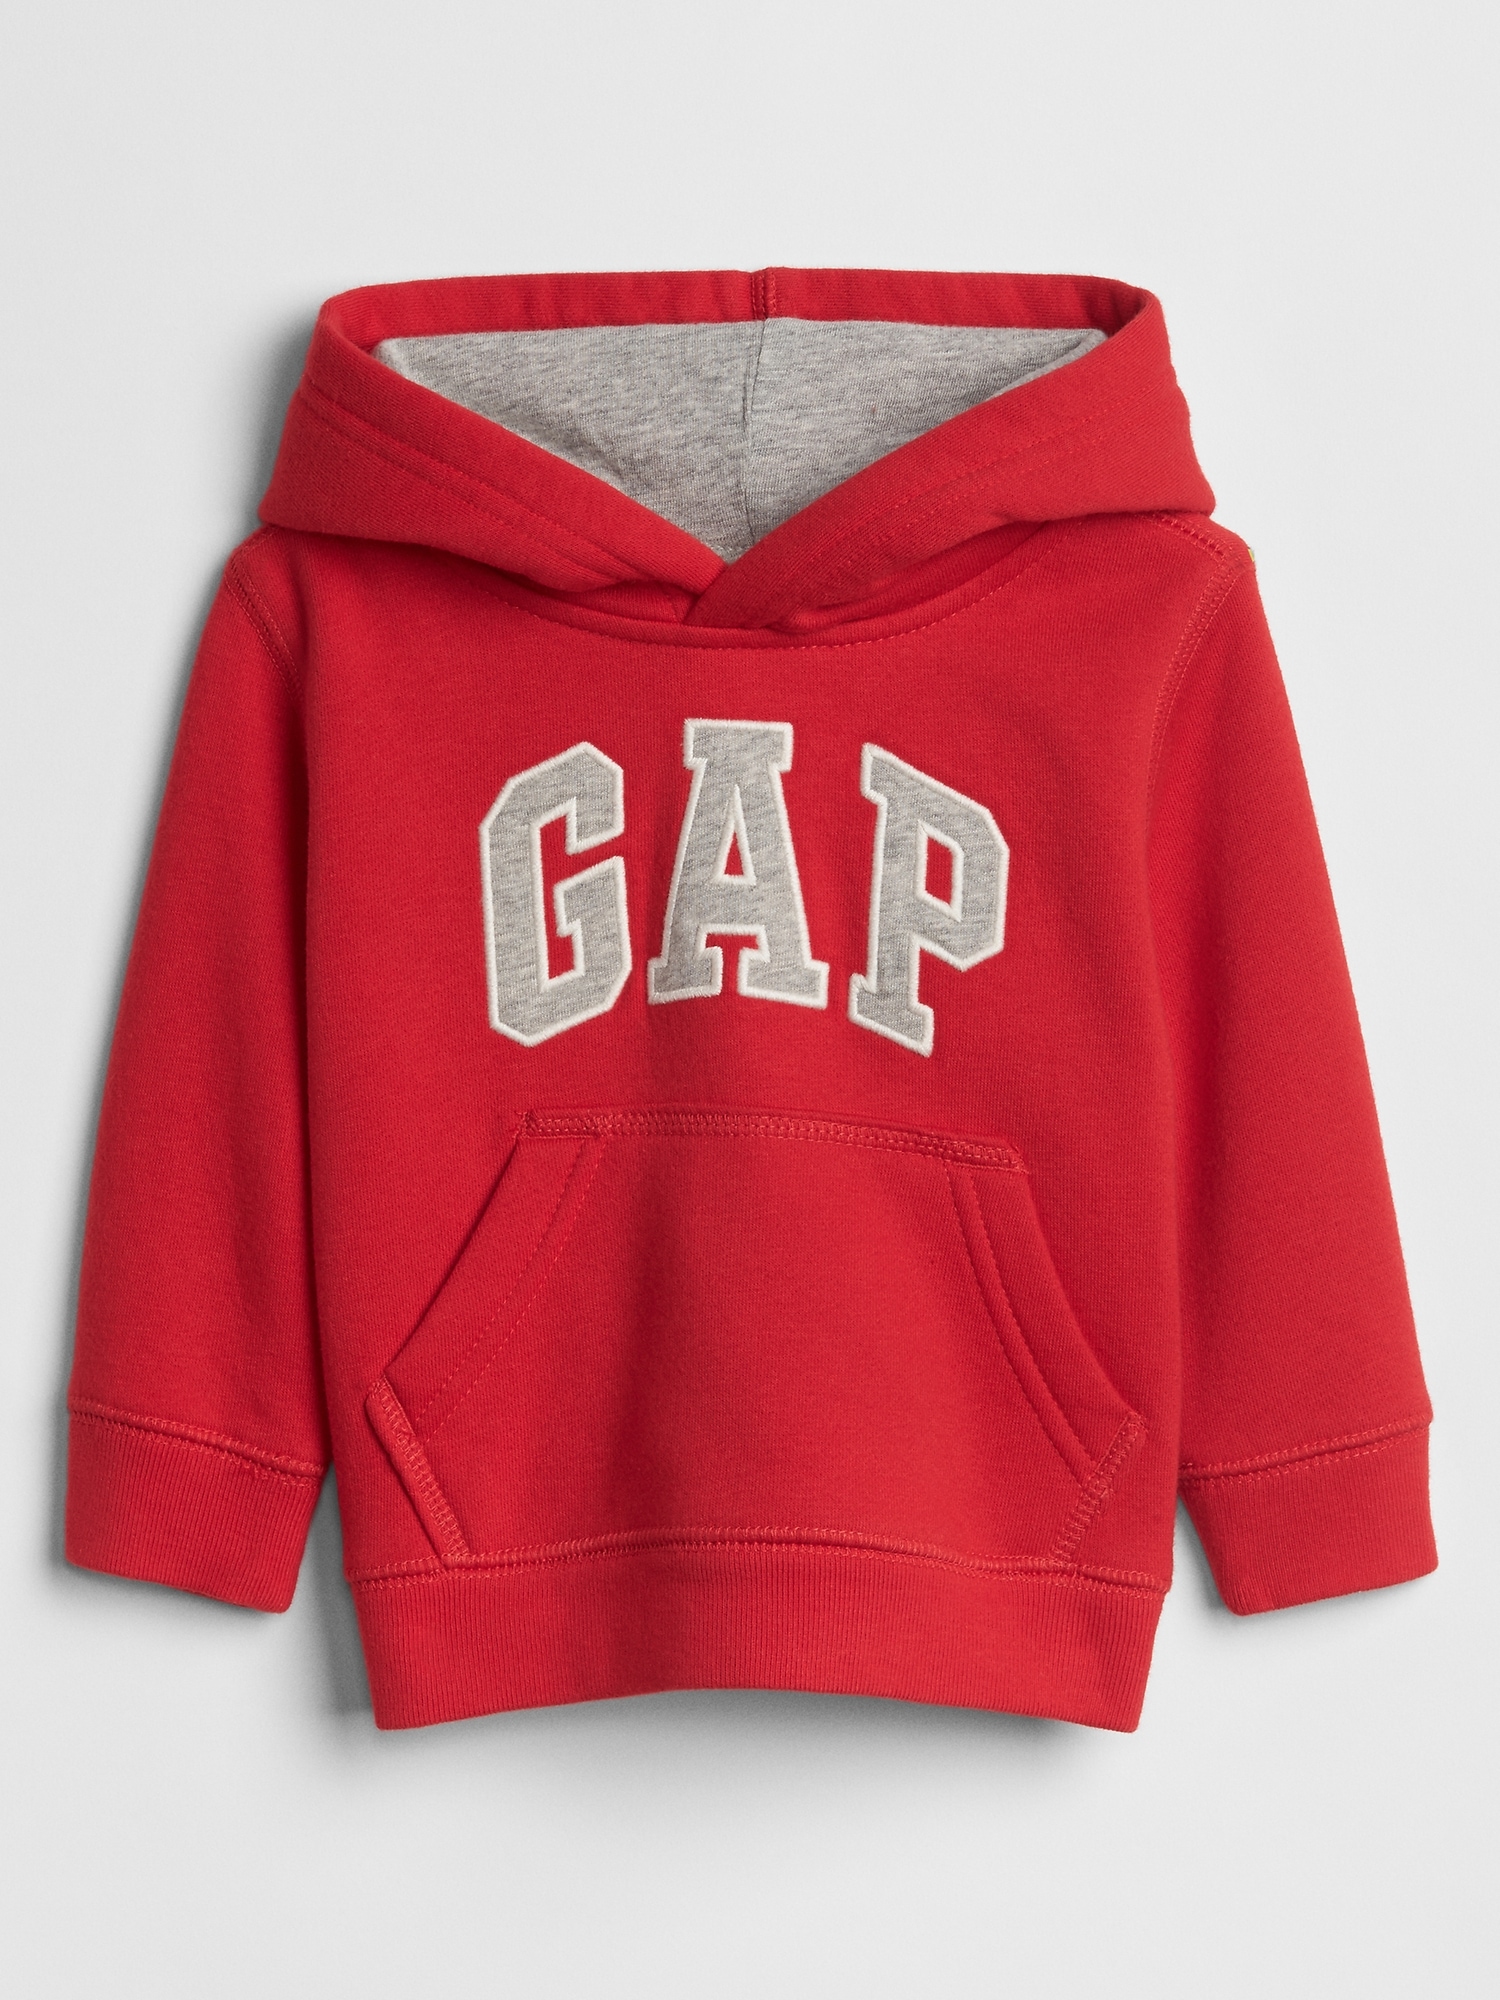 babyGap Logo | Gap Factory